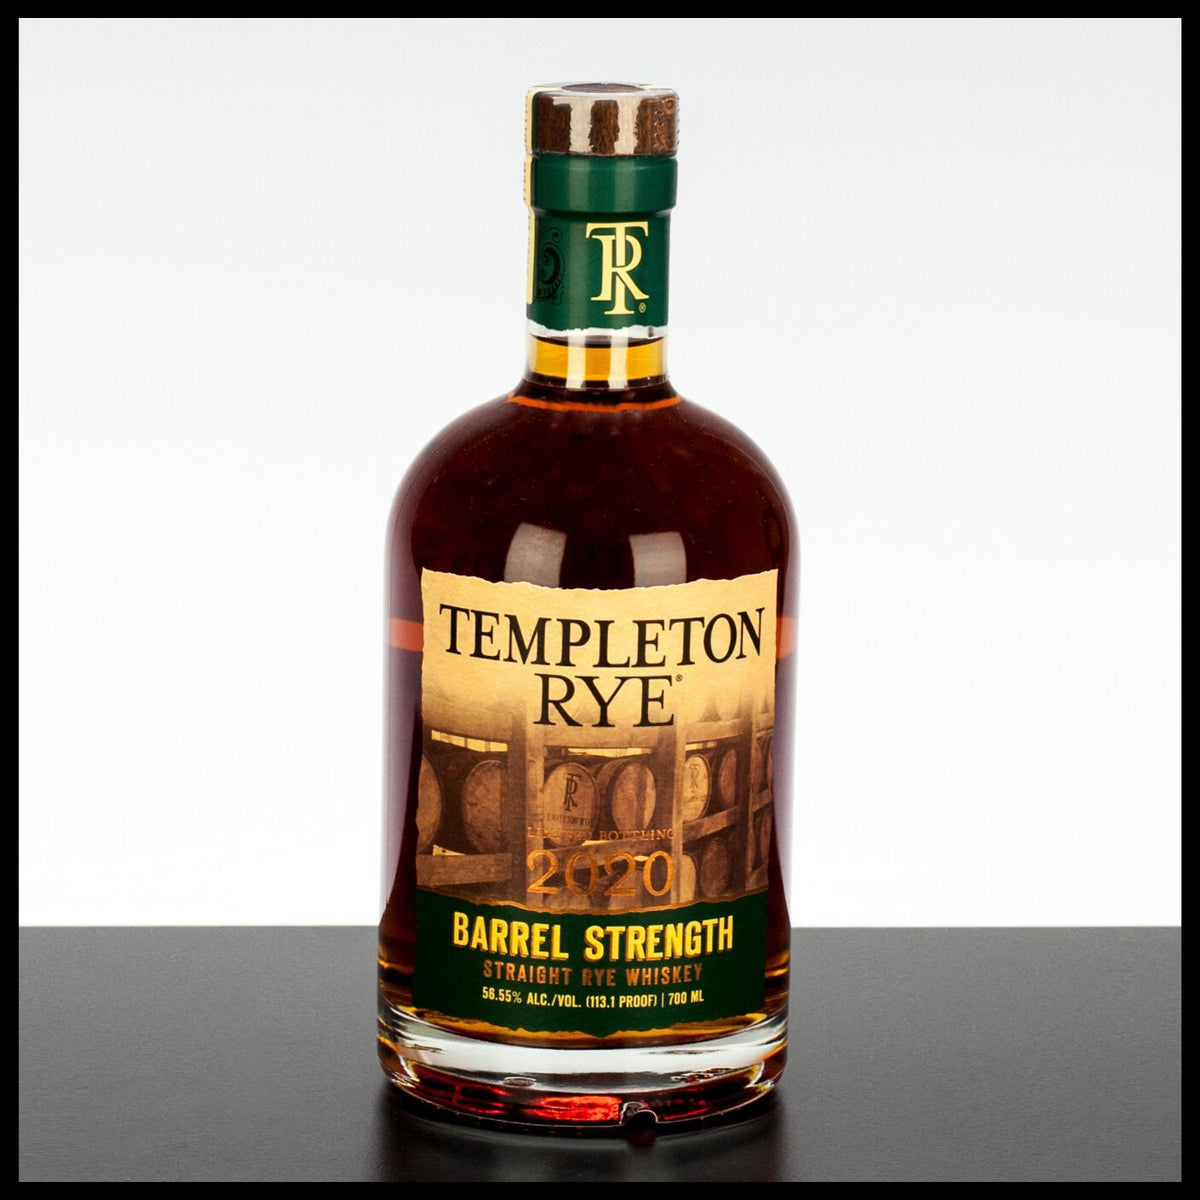 Templeton Rye Barrel Strength Straight Rye Whiskey 2020 0,7L - 56,6% Vol. - Trinklusiv